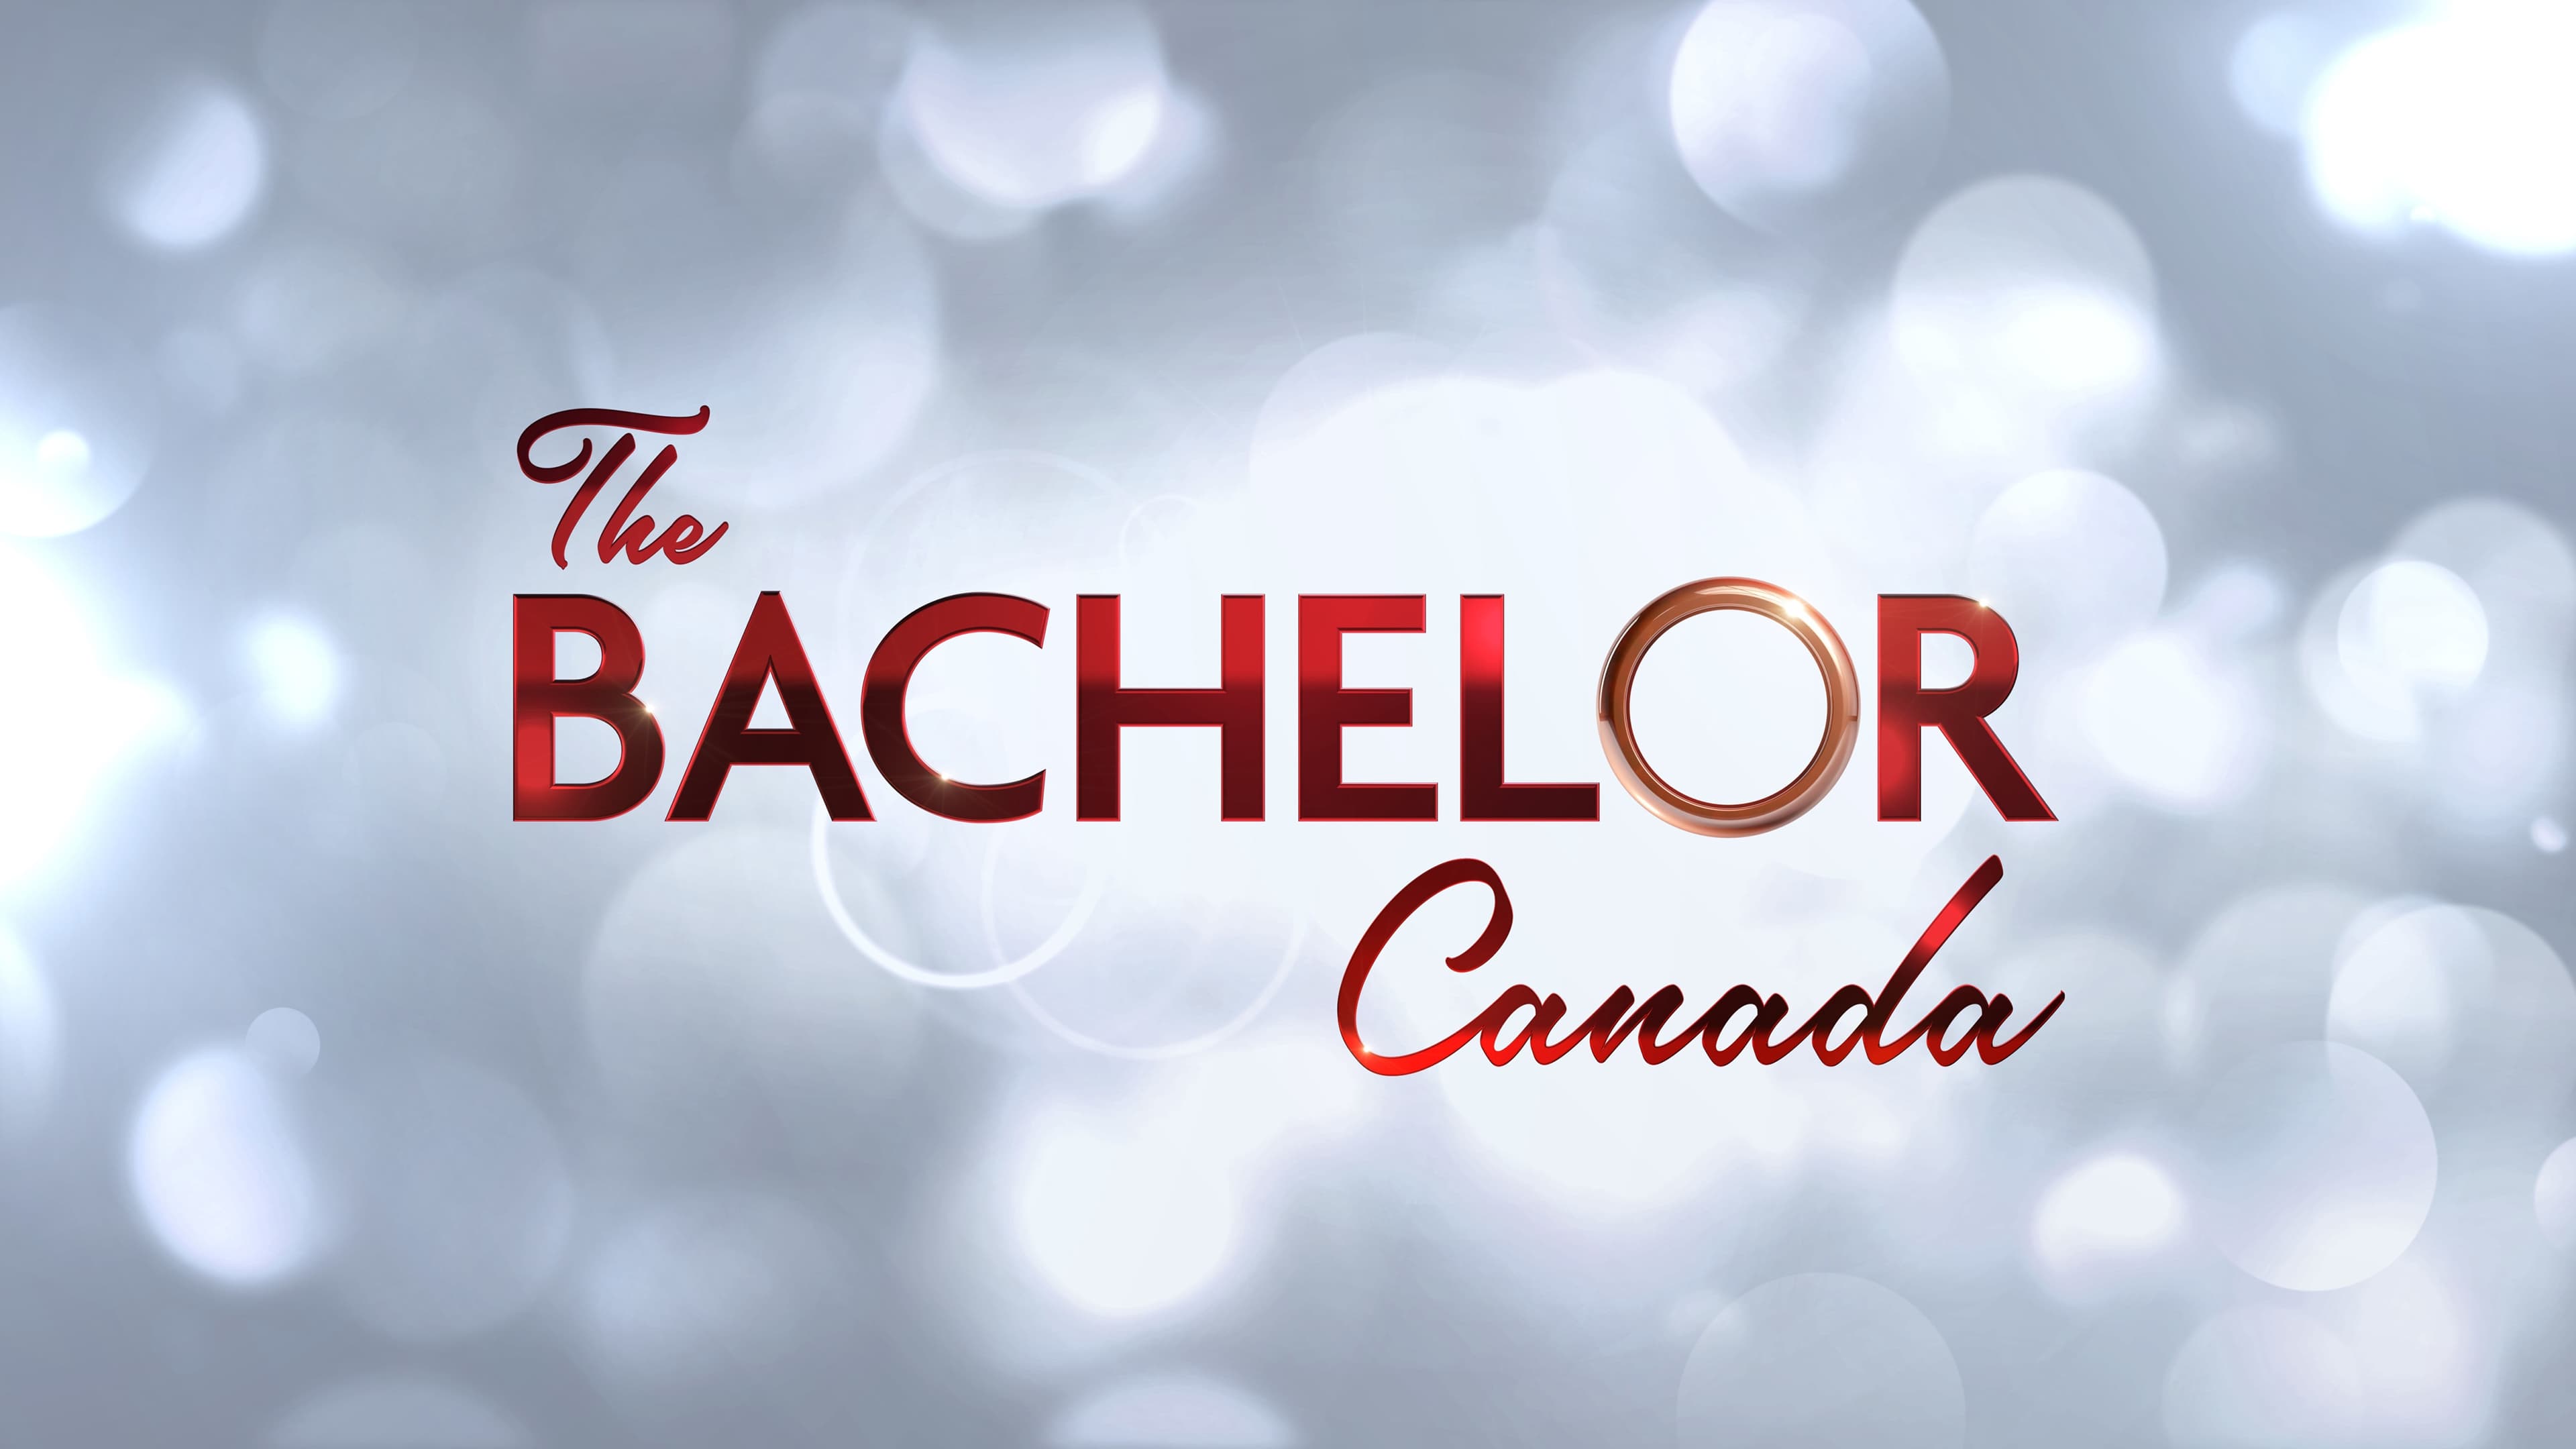 The Bachelor Canada